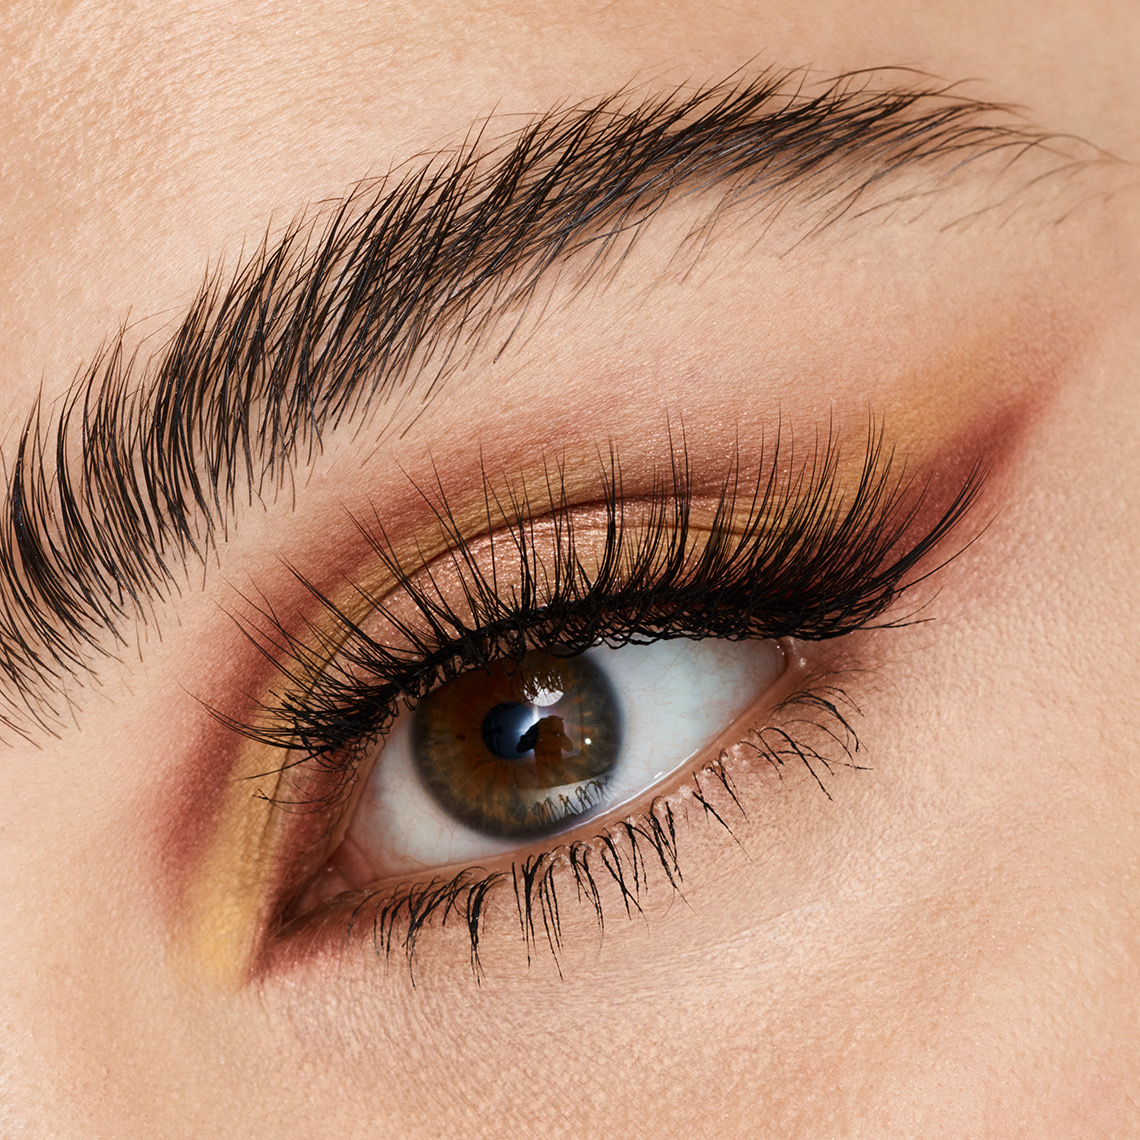 Eye Macro CloseUp for catrice cosmetics  - Marc Wuchner - Beauty Still Life Cosmetic and Texture Photographer, Frankfurt